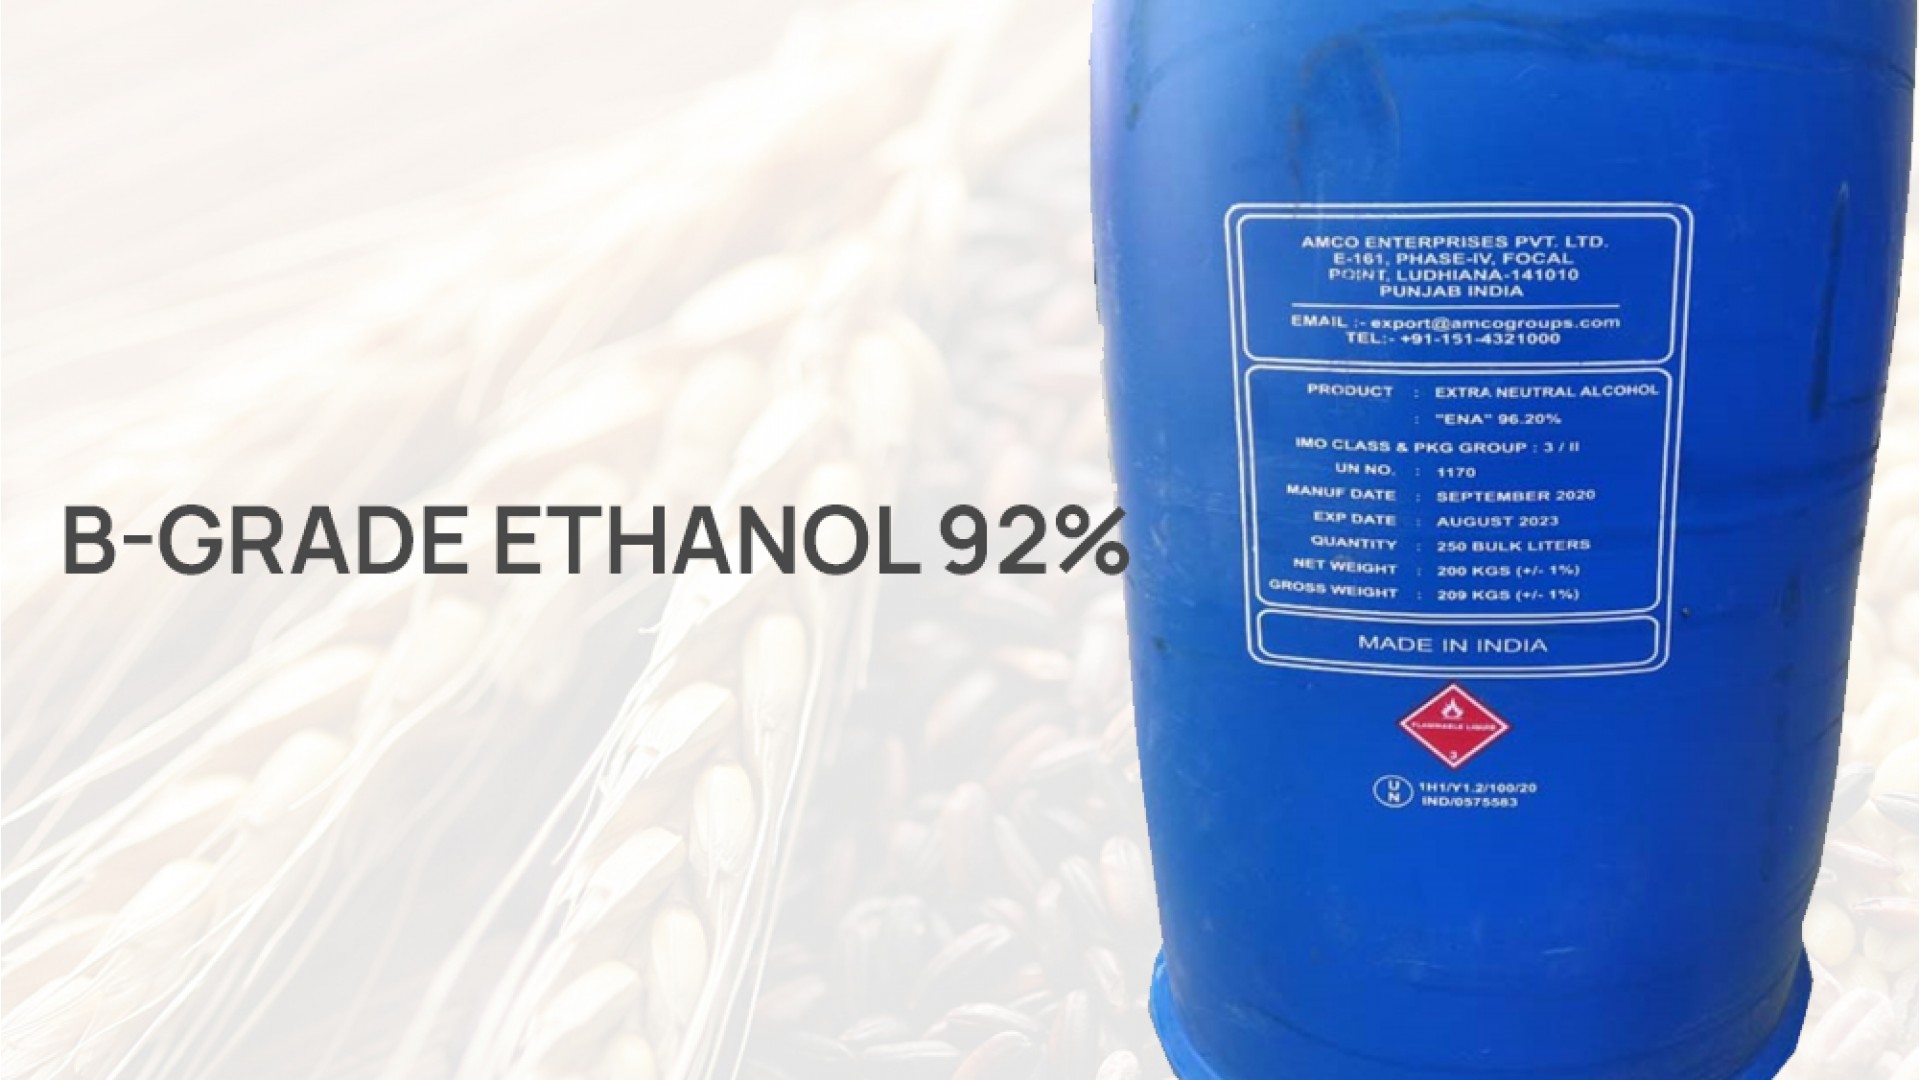 B-GRADE Ethanol 92%